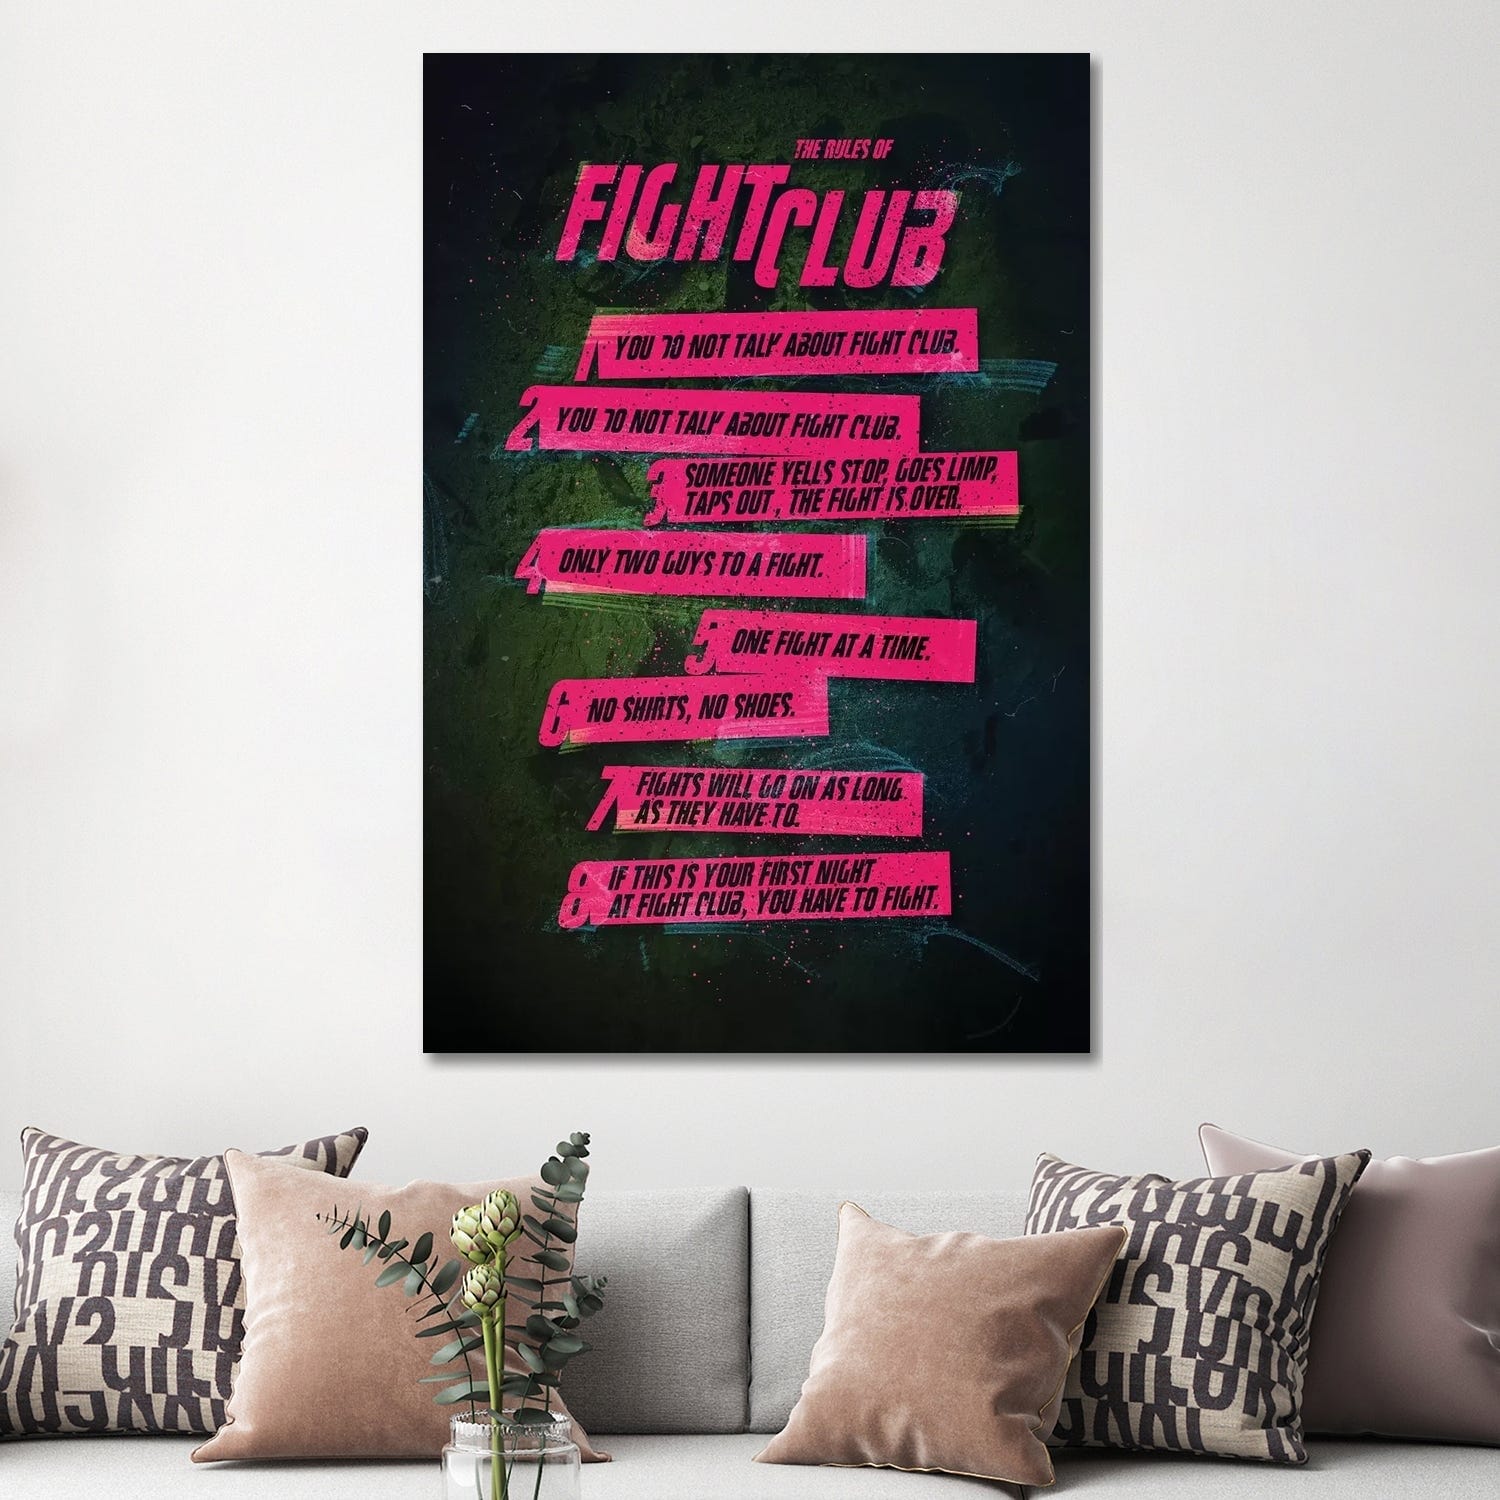 Fight Club Rules print by Nikita Abakumov